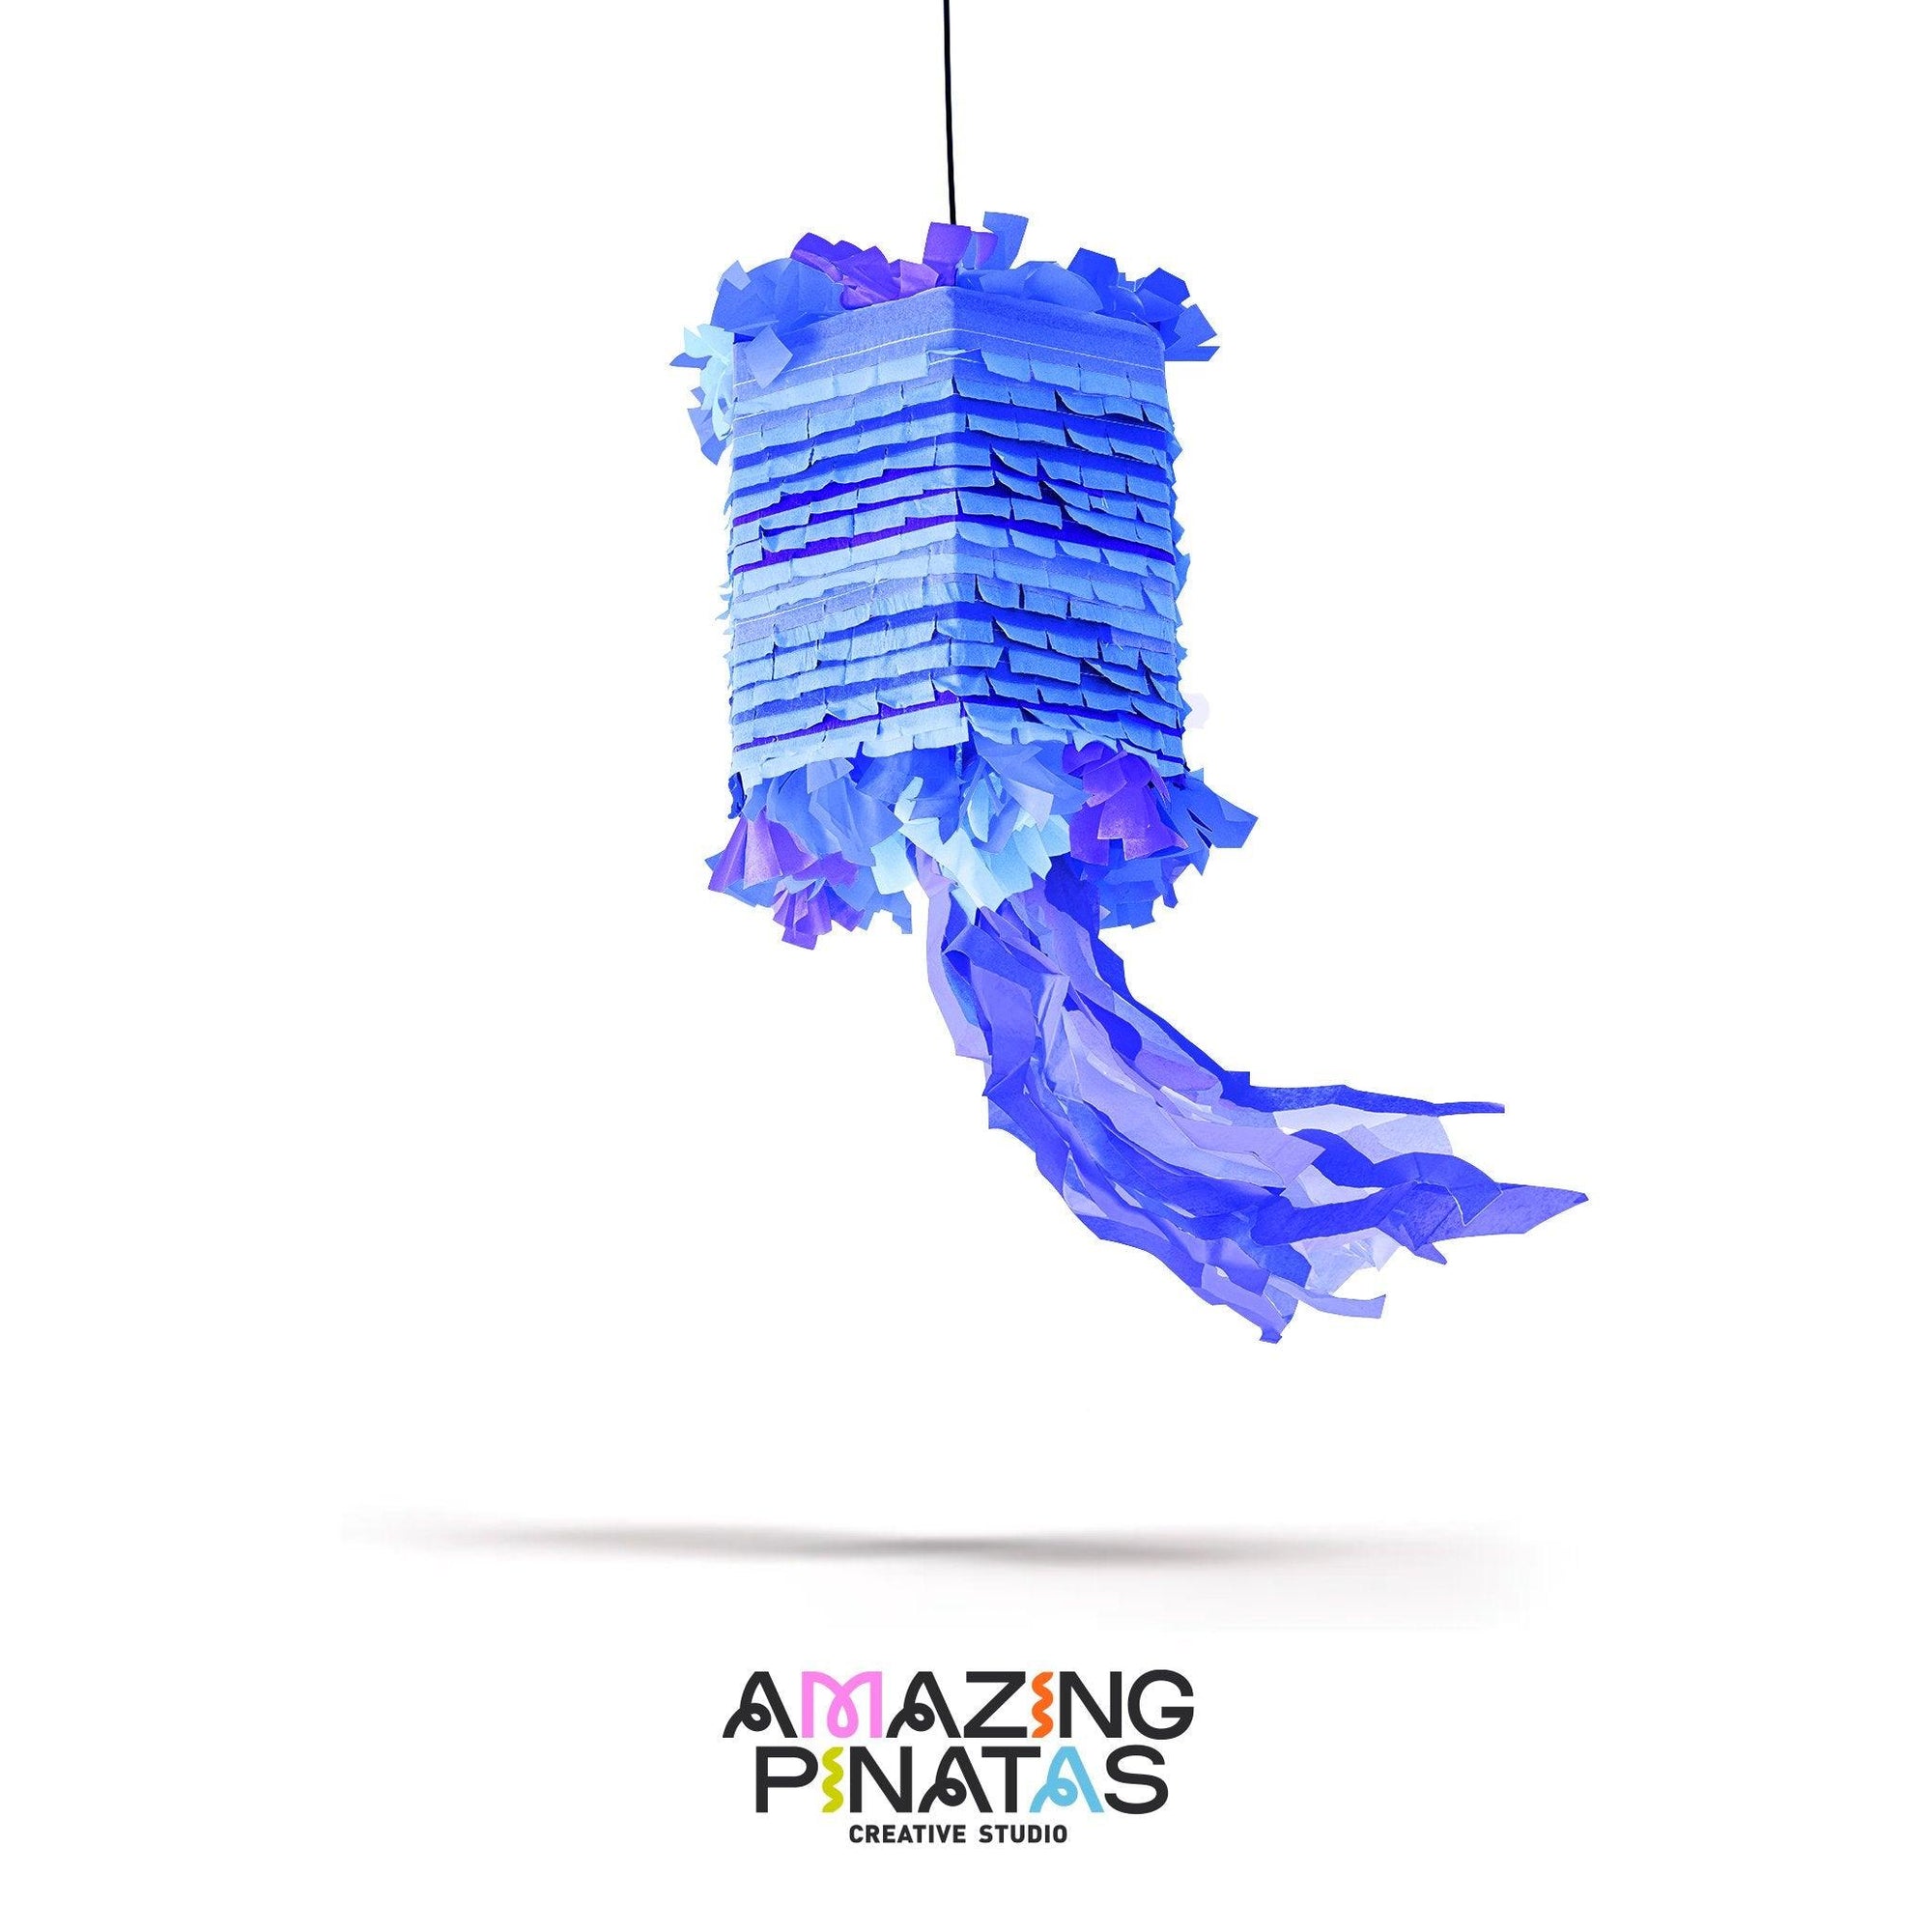 Spinblast Piñata | Amazing Pinatas